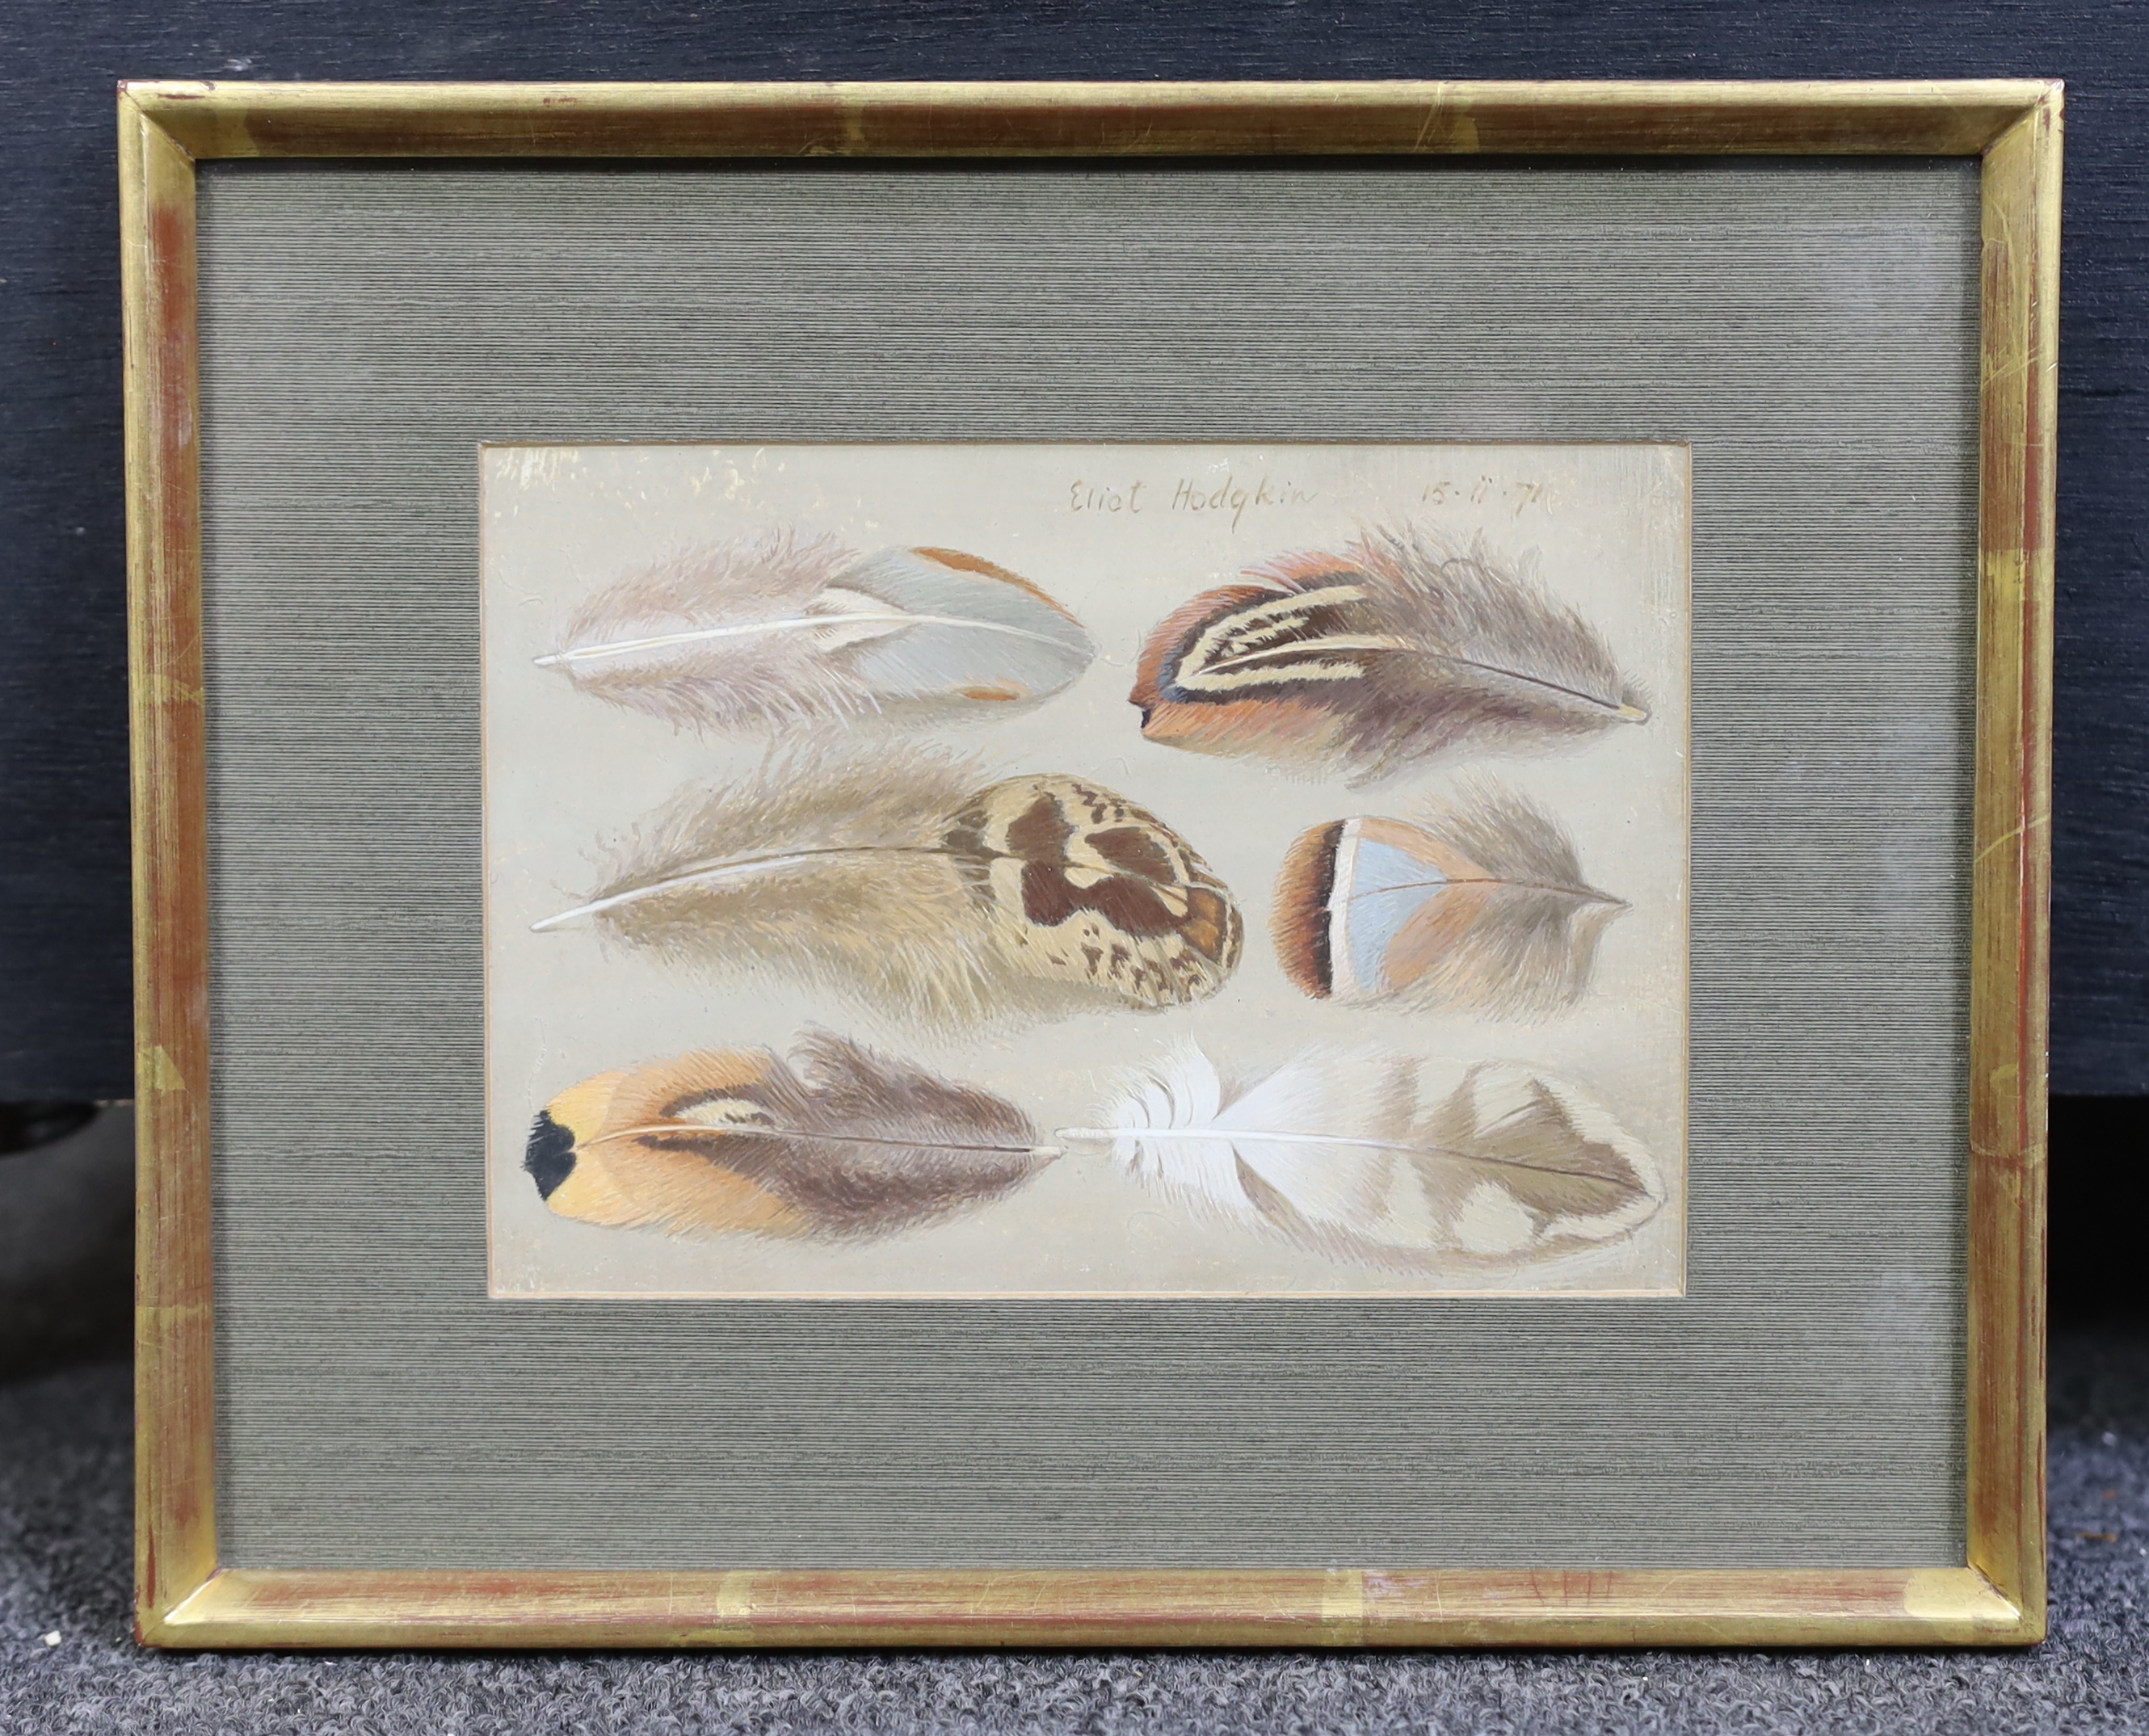 Eliot Hodgkin (English, 1905-1987), Six Feathers, tempera on card, 10.75 x 15.25cm